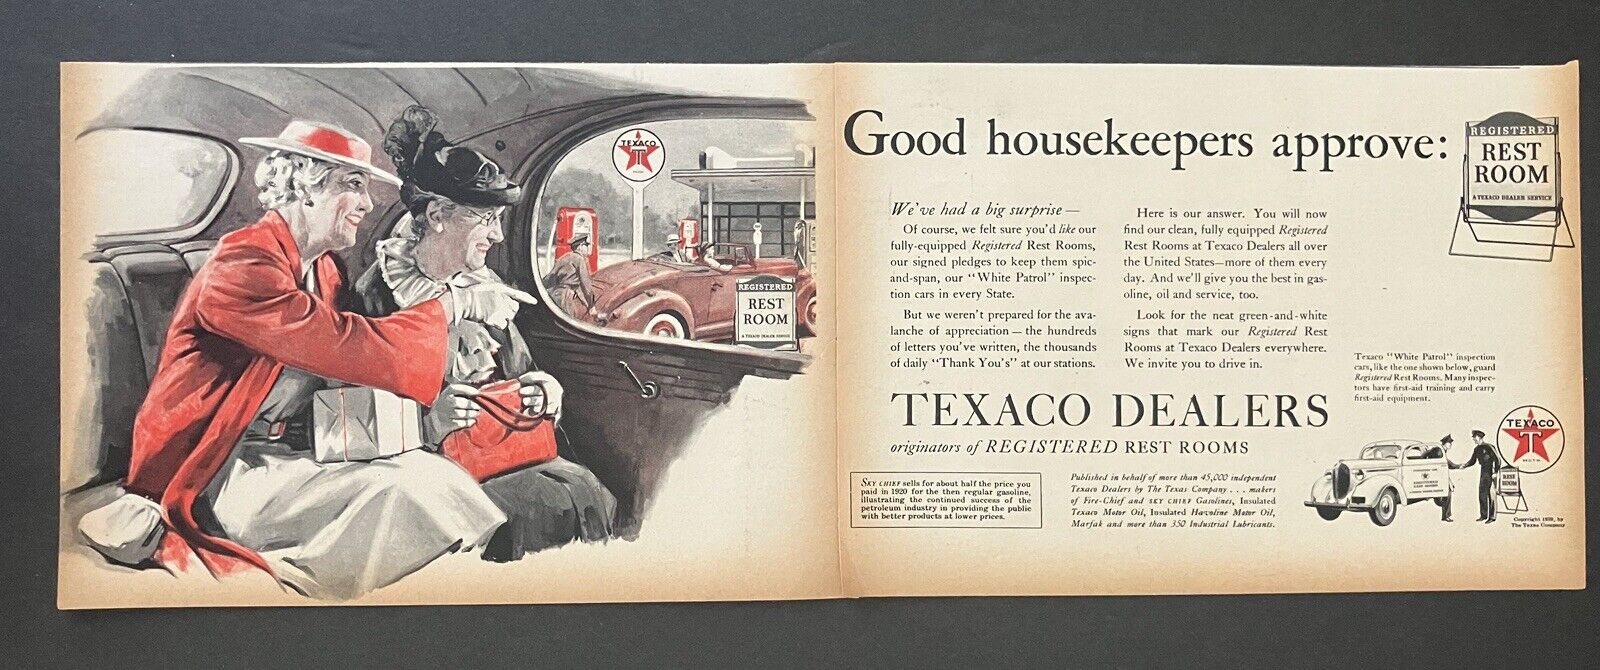 1939 Texaco Dealers Registered Restroom Good Housekeepers Approve Vtg Print Ad